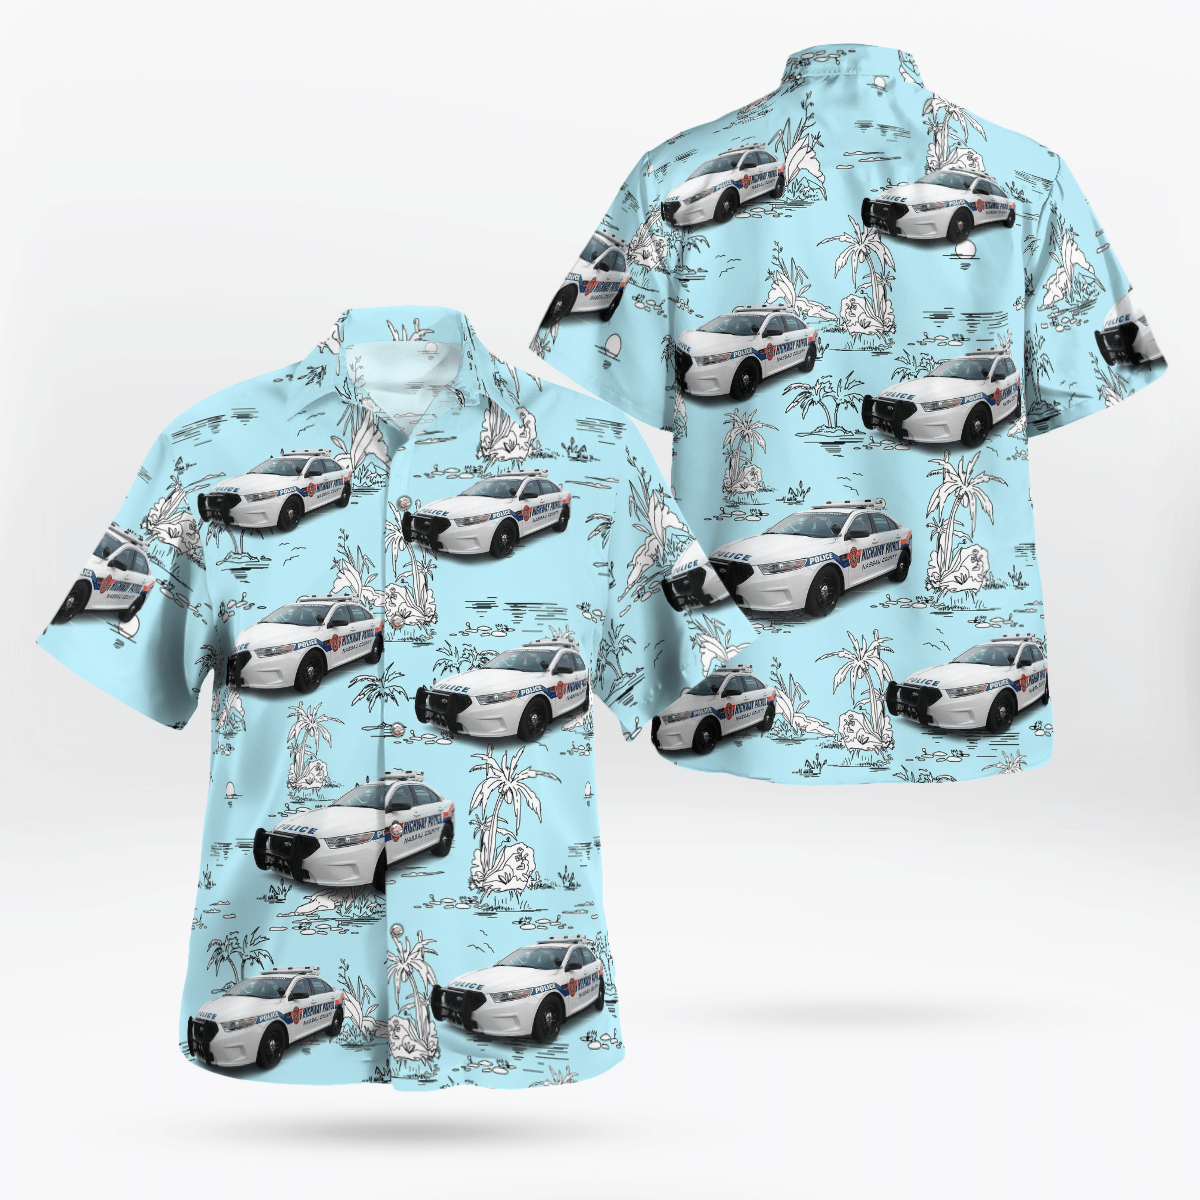 Listed below are some High-quality Aloha Shirt 33